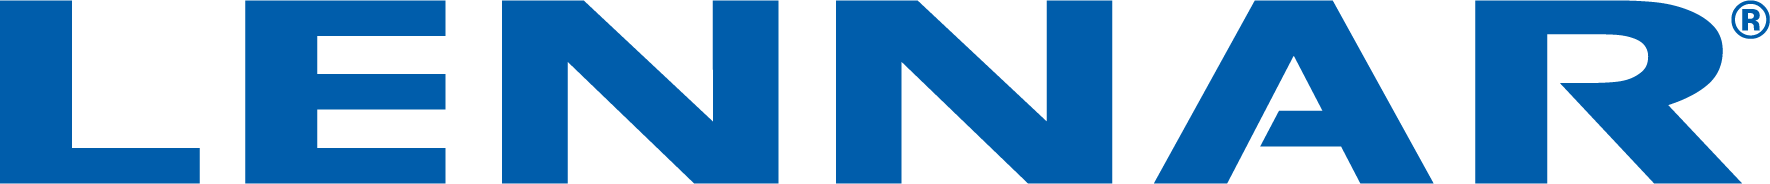 Lennar logo